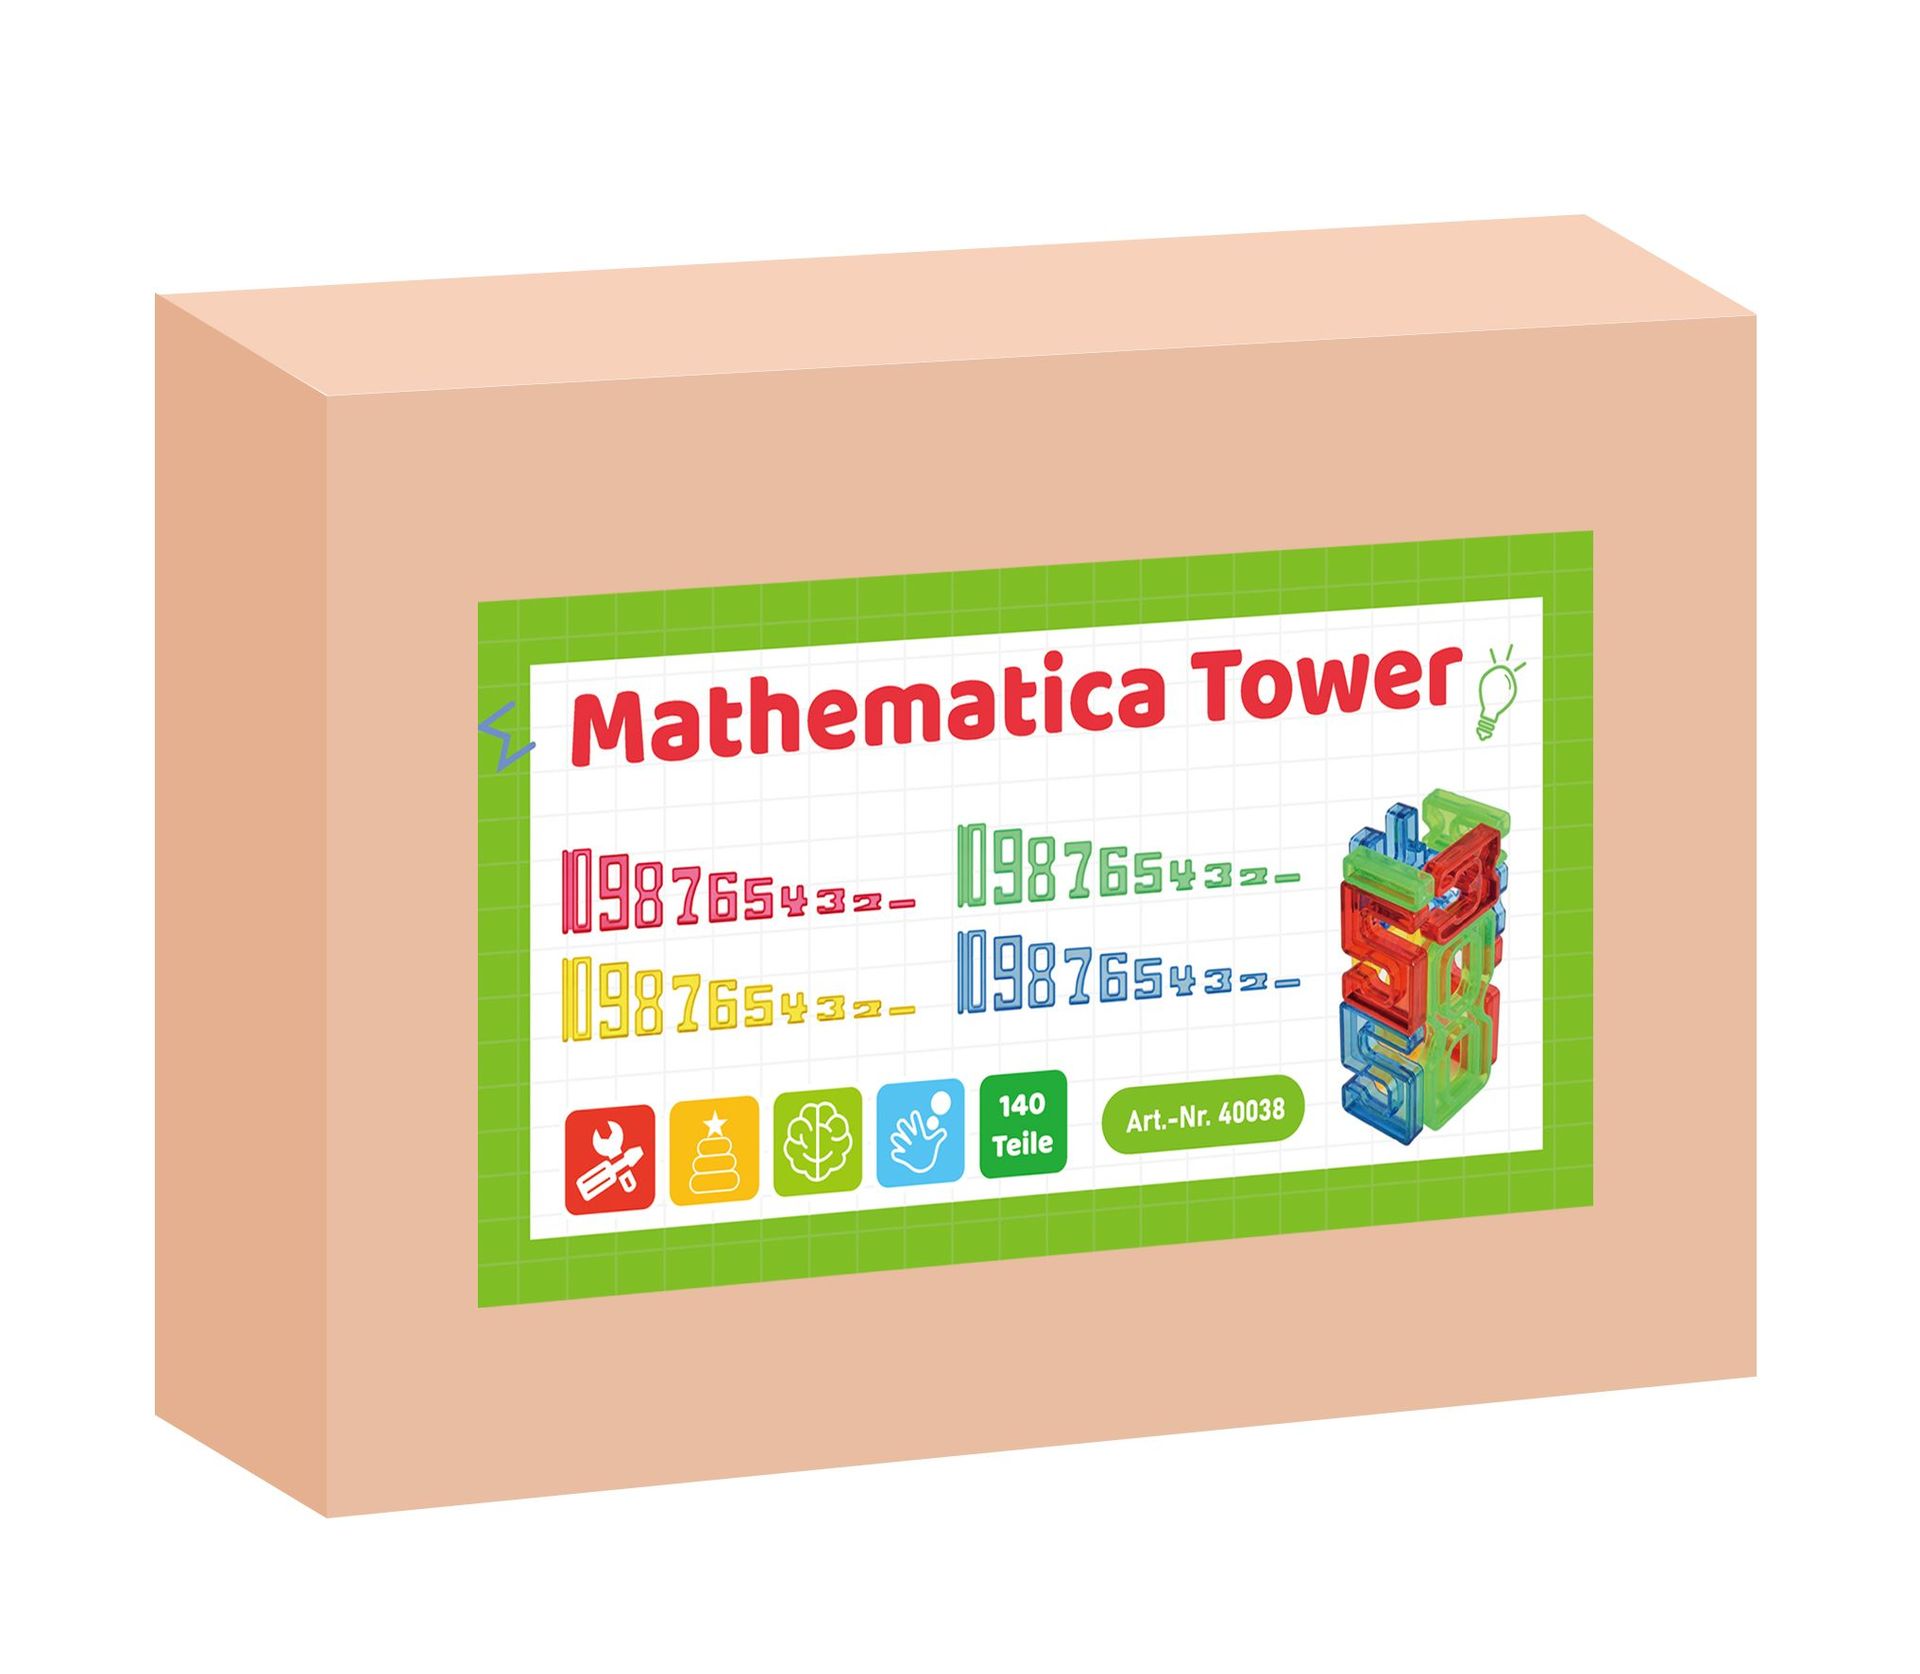 Mathematica Tower